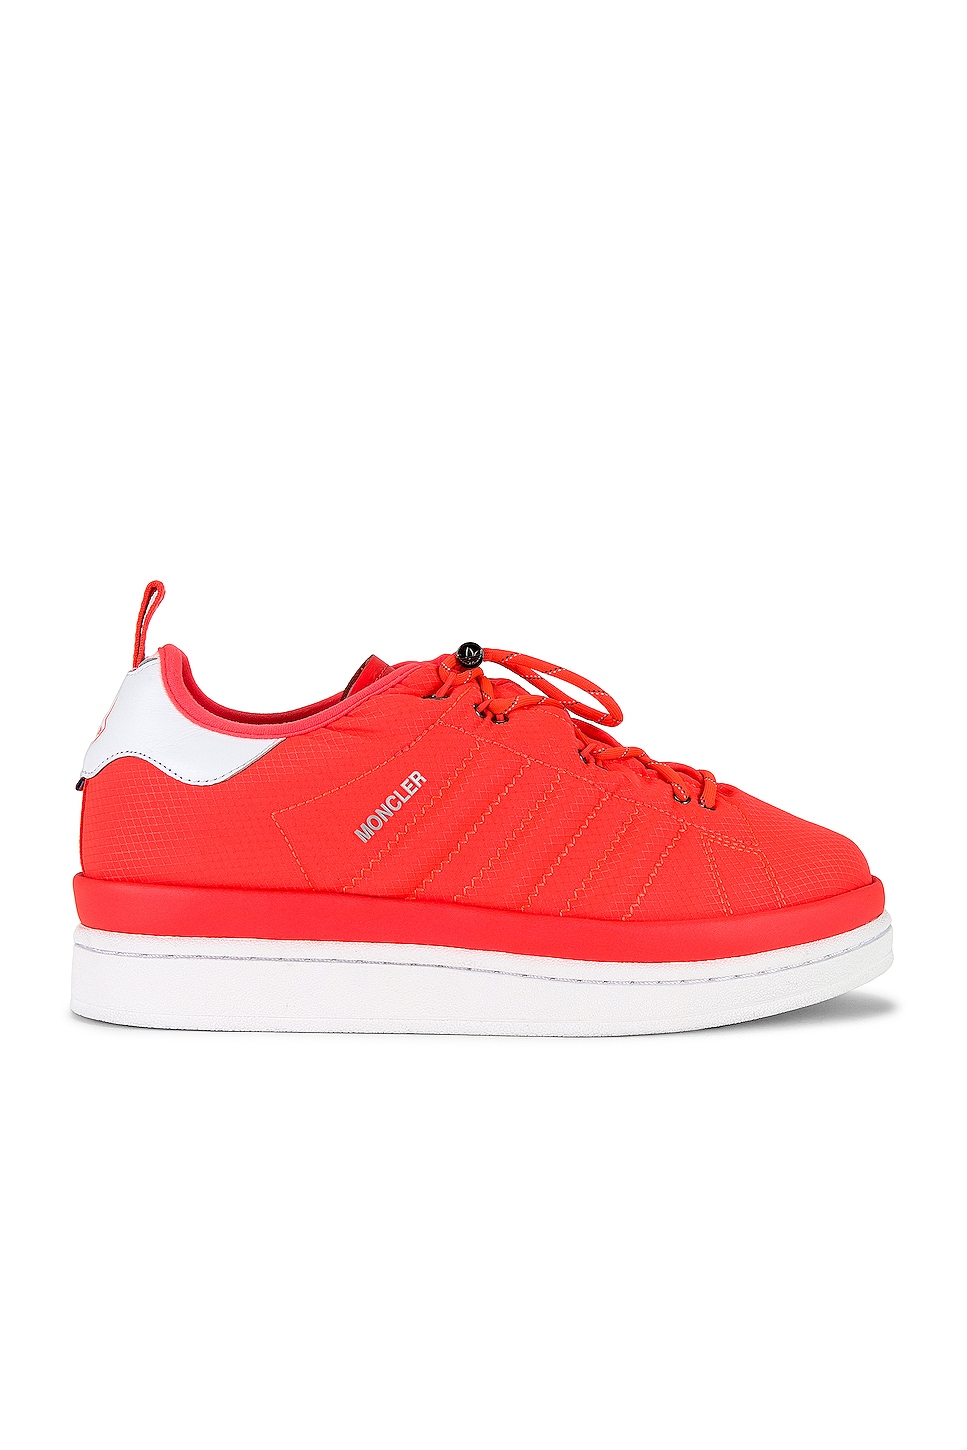 Image 1 of Moncler Genius x Adidas Campus Low Top Sneakers in Neon Orange